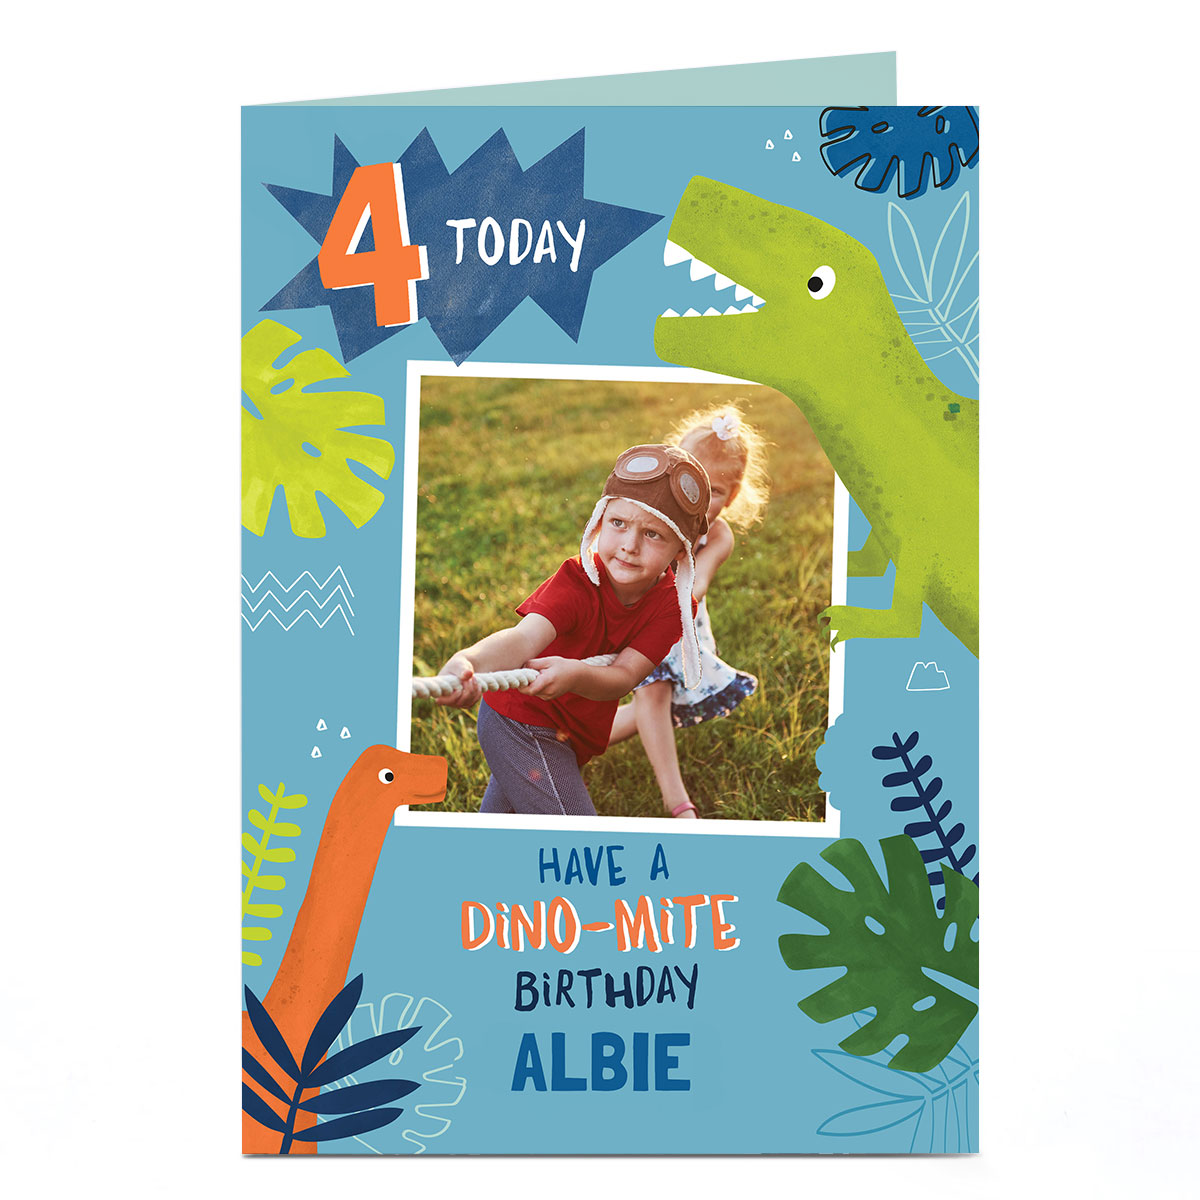 Personalised Birthday Photo Card - Dino-mite Birthday 